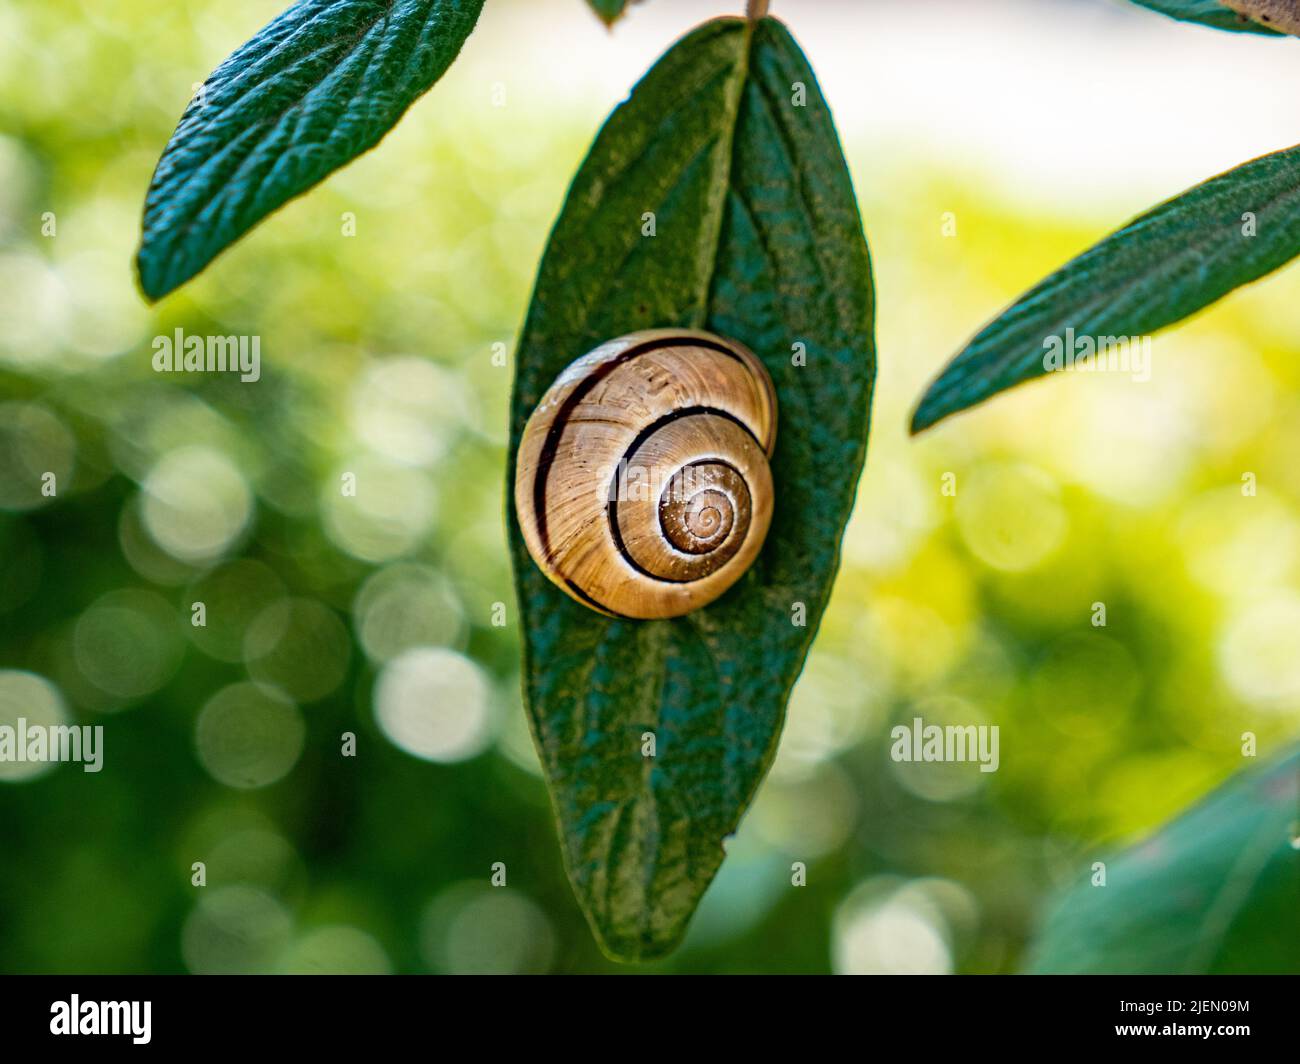 A snail on a leaf Stock Photo